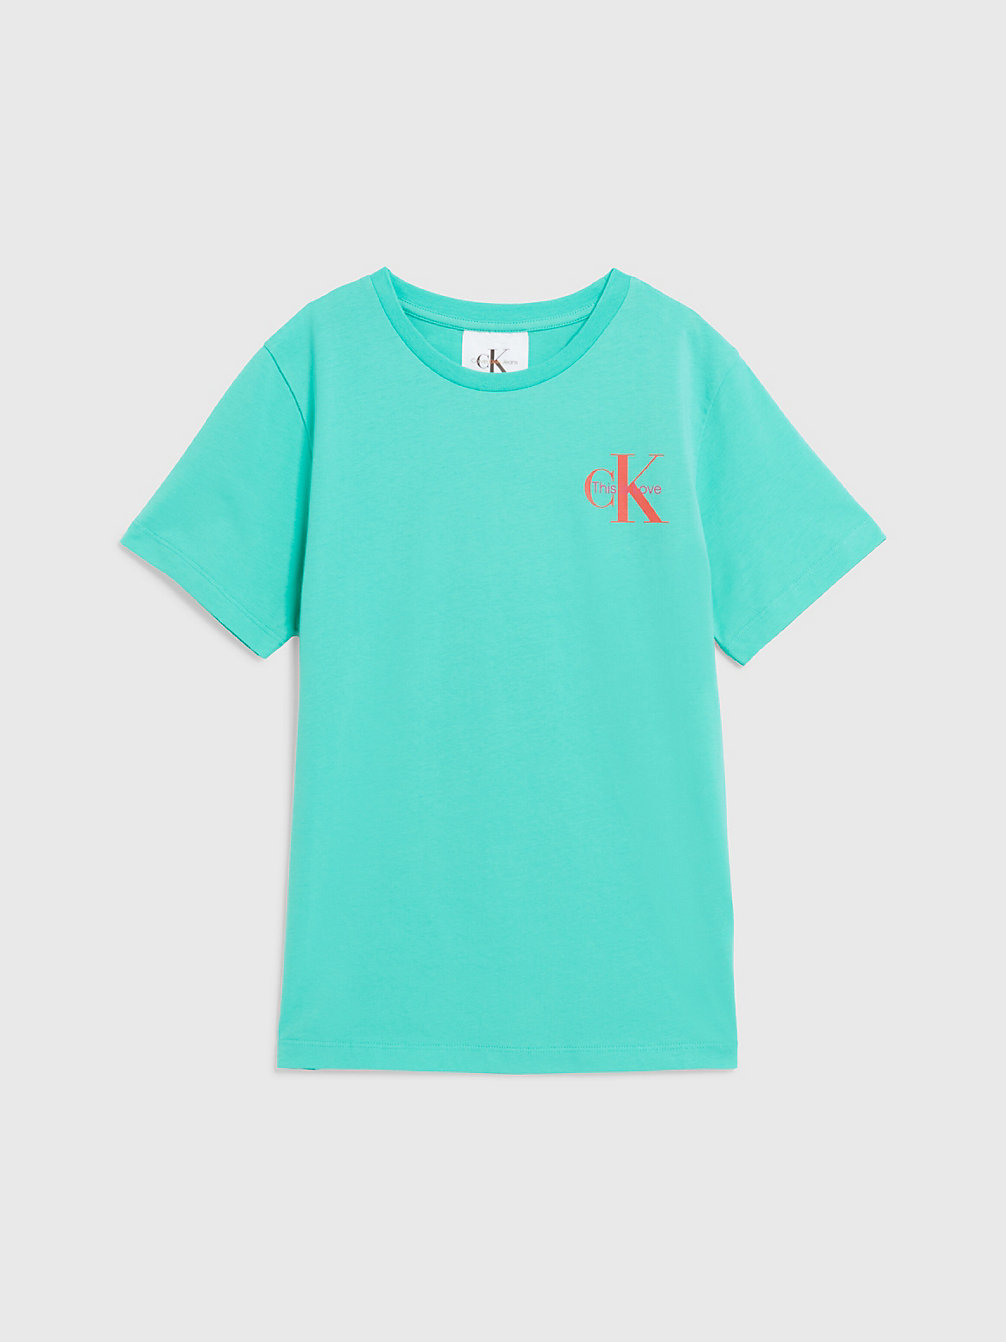 AQUA GREEN > Unisex T-Shirt Met Pride-Logo - Pride > undefined kids unisex - Calvin Klein